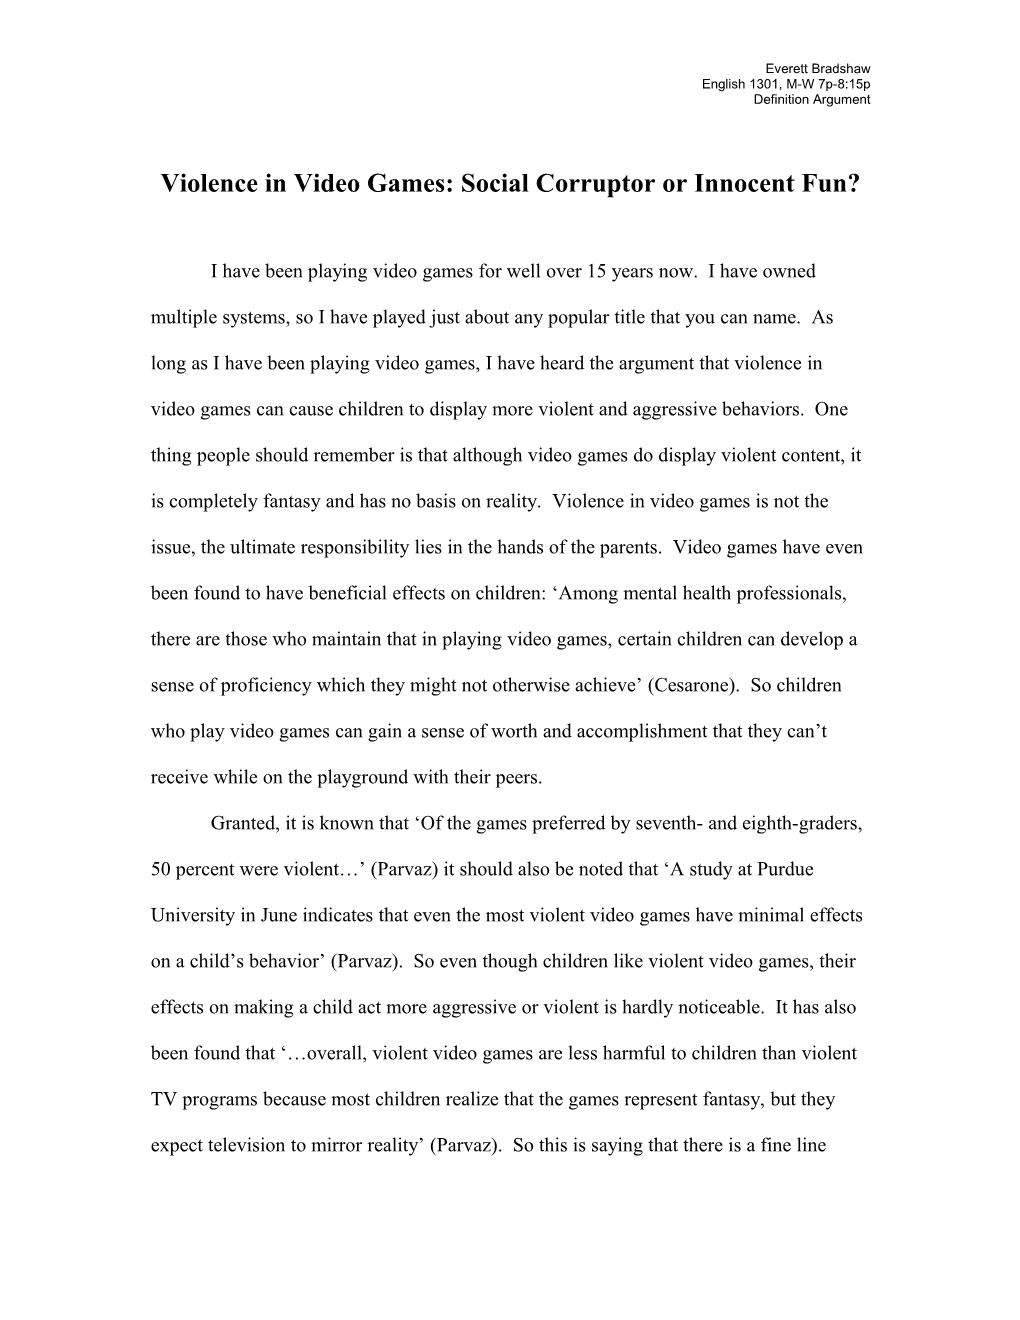 Violence in Video Games: Social Corruptor Or Innocent Fun?